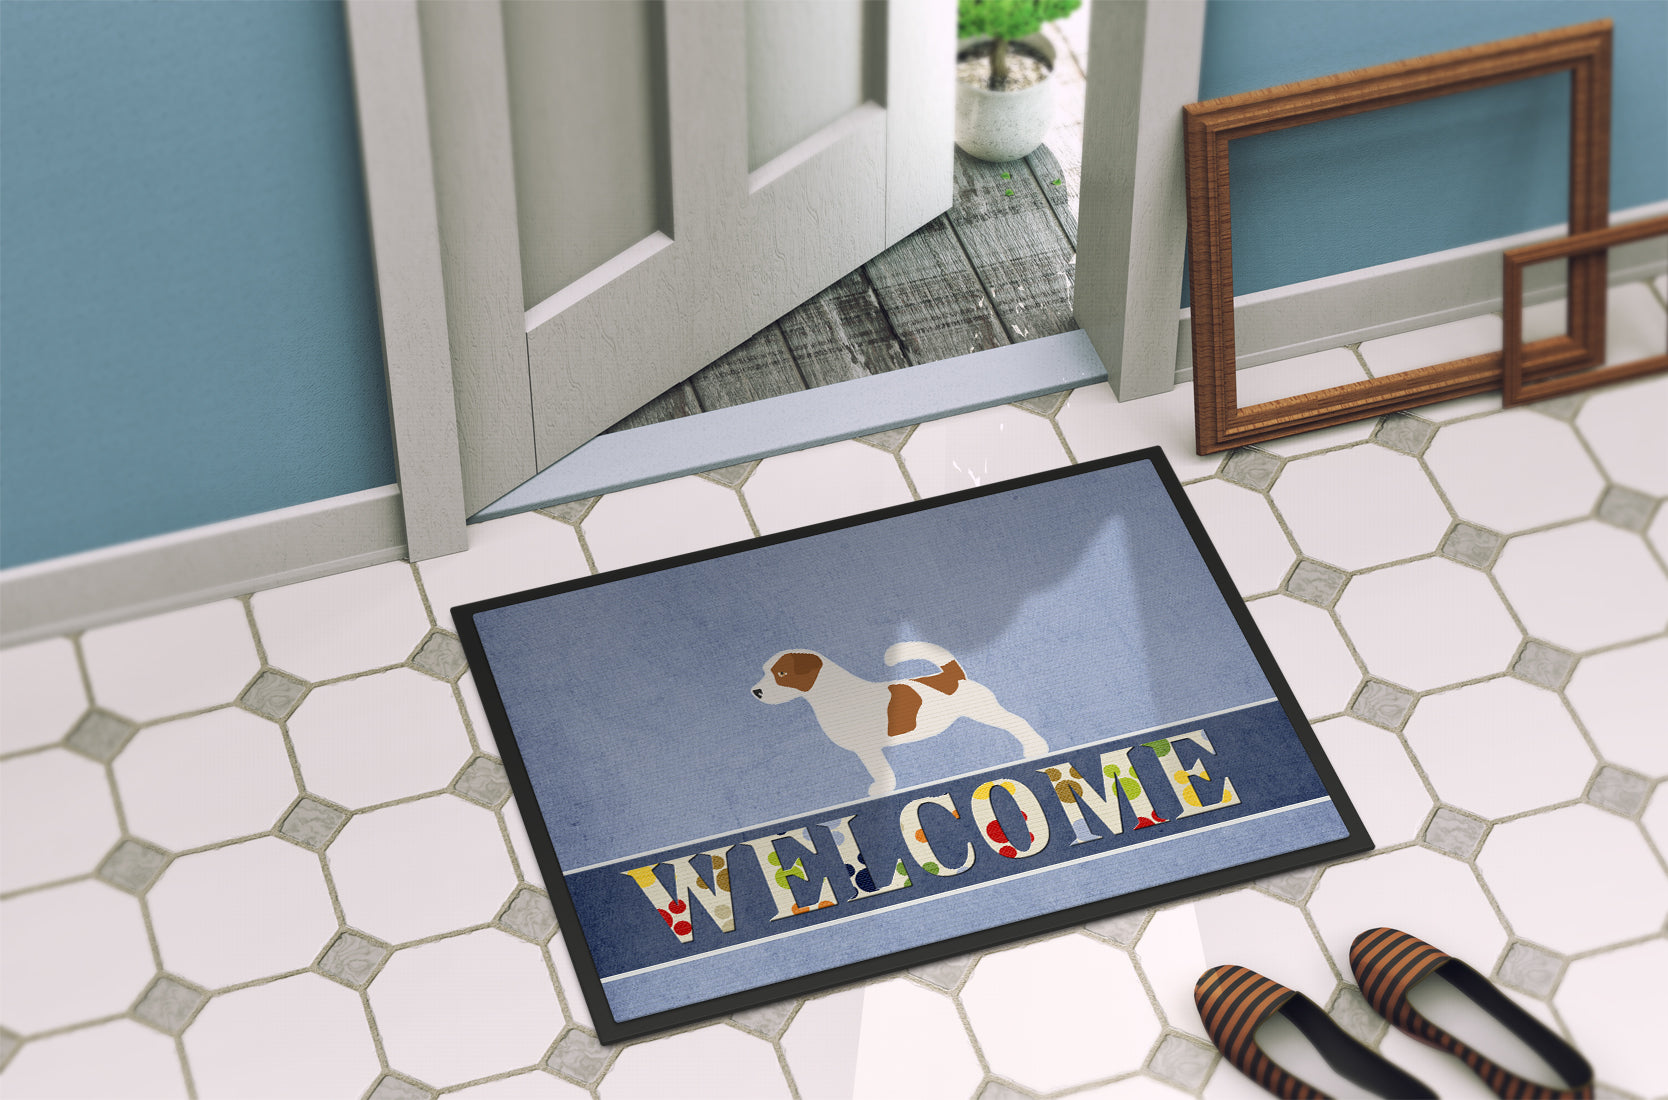 Jack Russell Terrier Welcome Indoor or Outdoor Mat 18x27 BB5511MAT - the-store.com